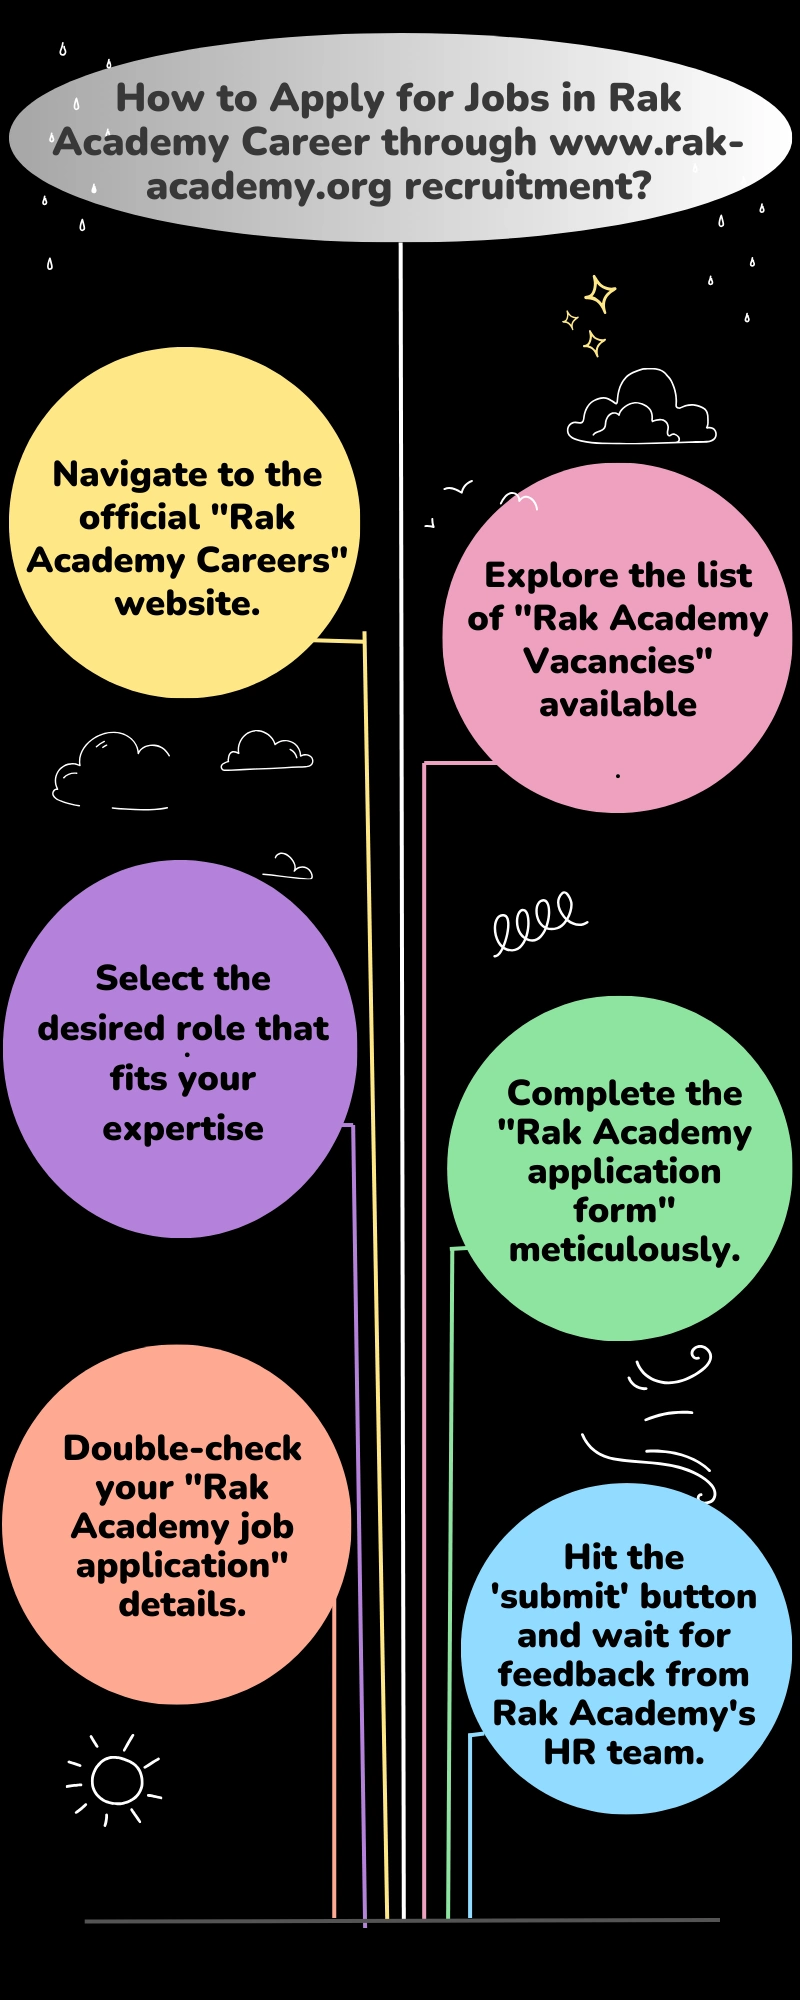 How to Apply for Jobs in Rak Academy Career through www.rak-academy.org recruitment?